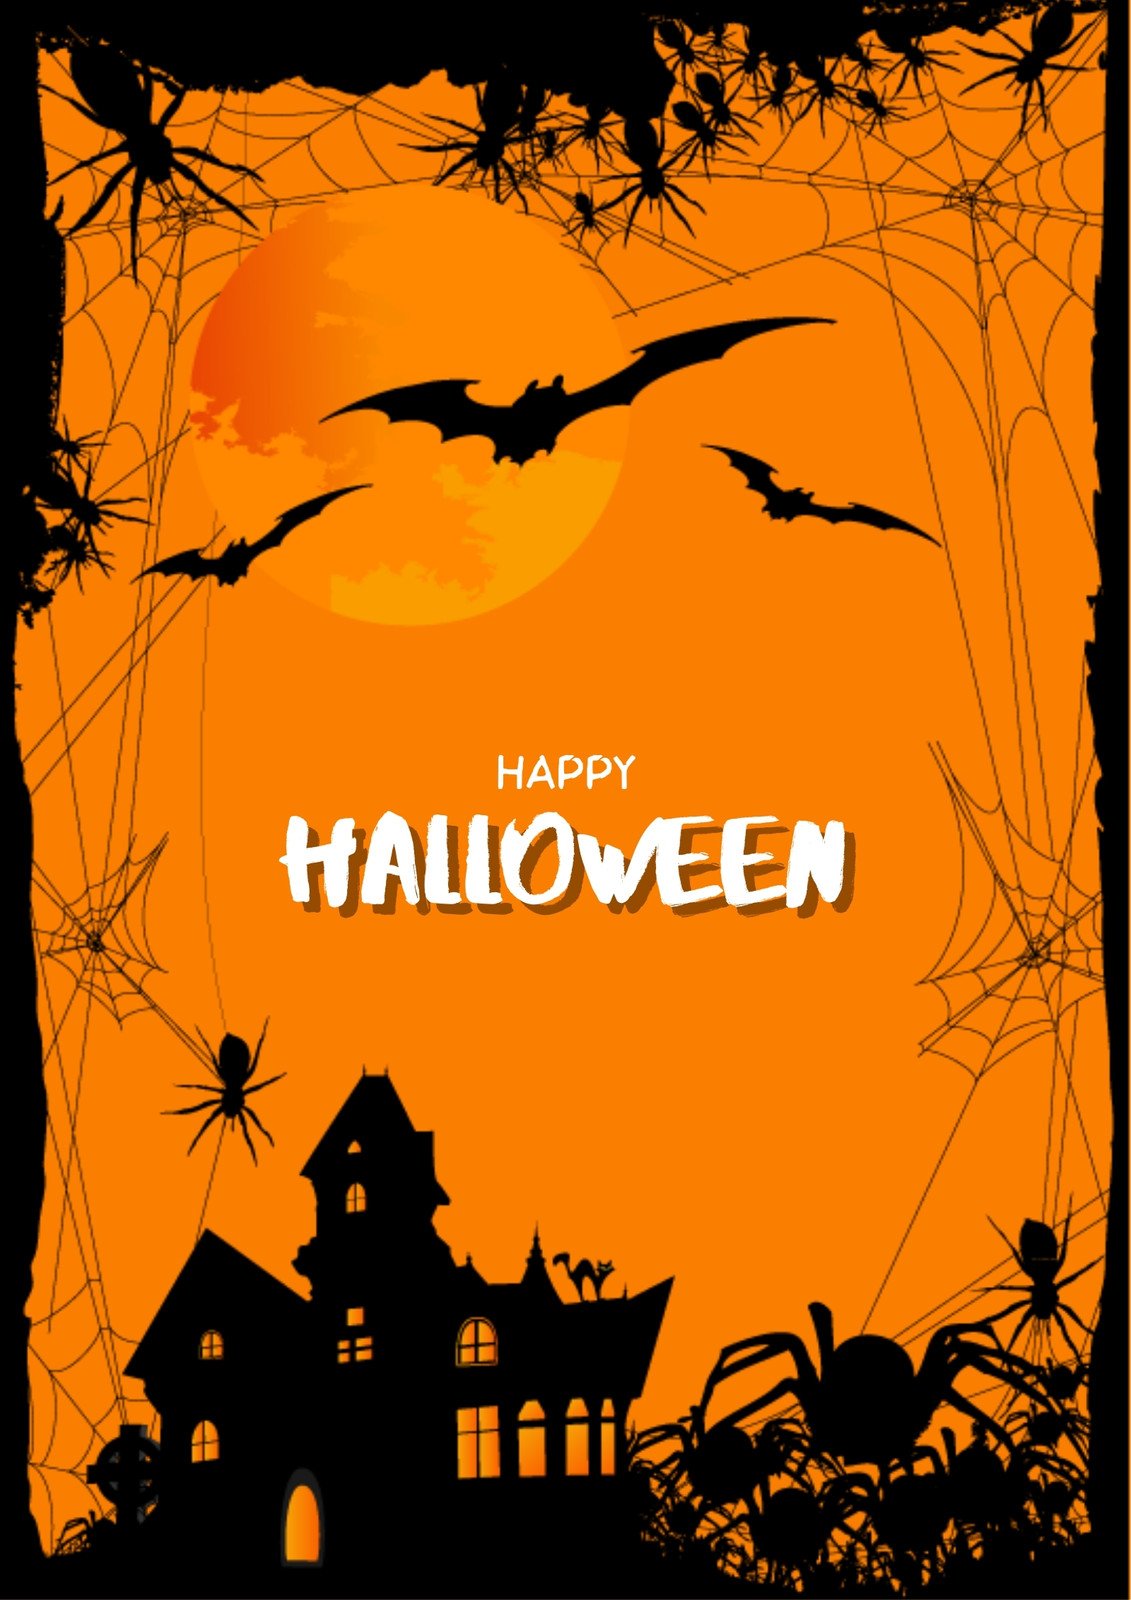 Page 2 - Free custom printable Halloween poster templates